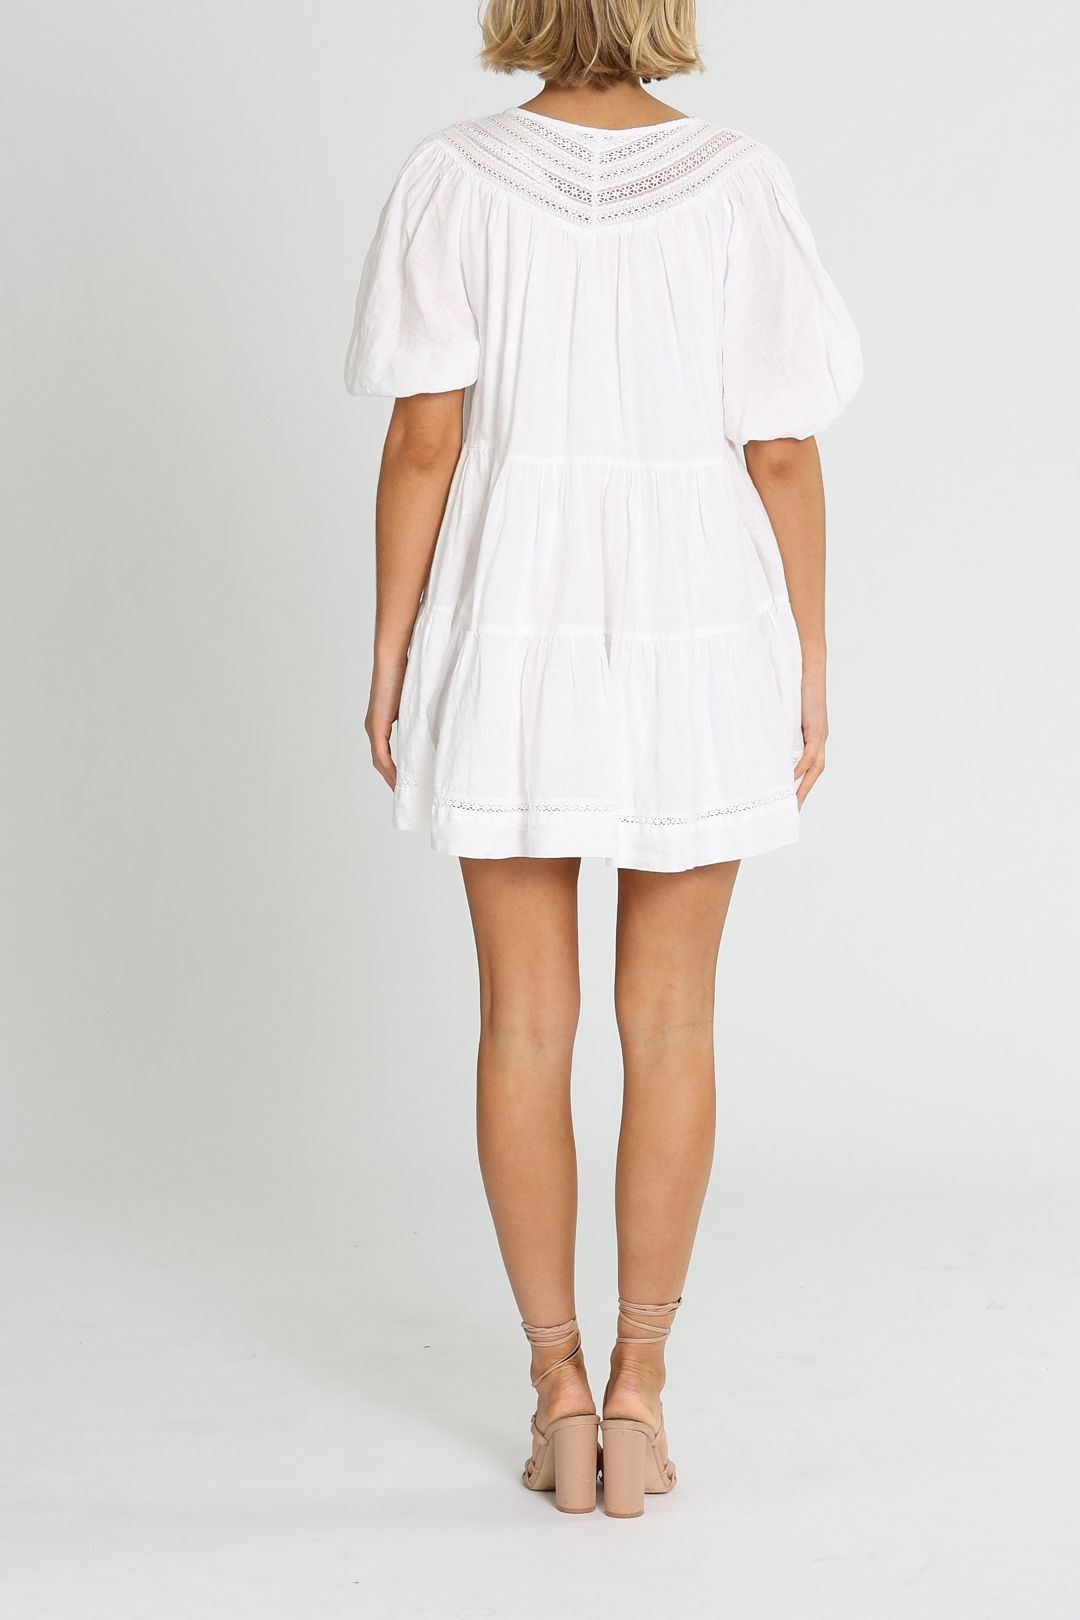 Shona Joy Adriana Mini Dress White Lace Trim